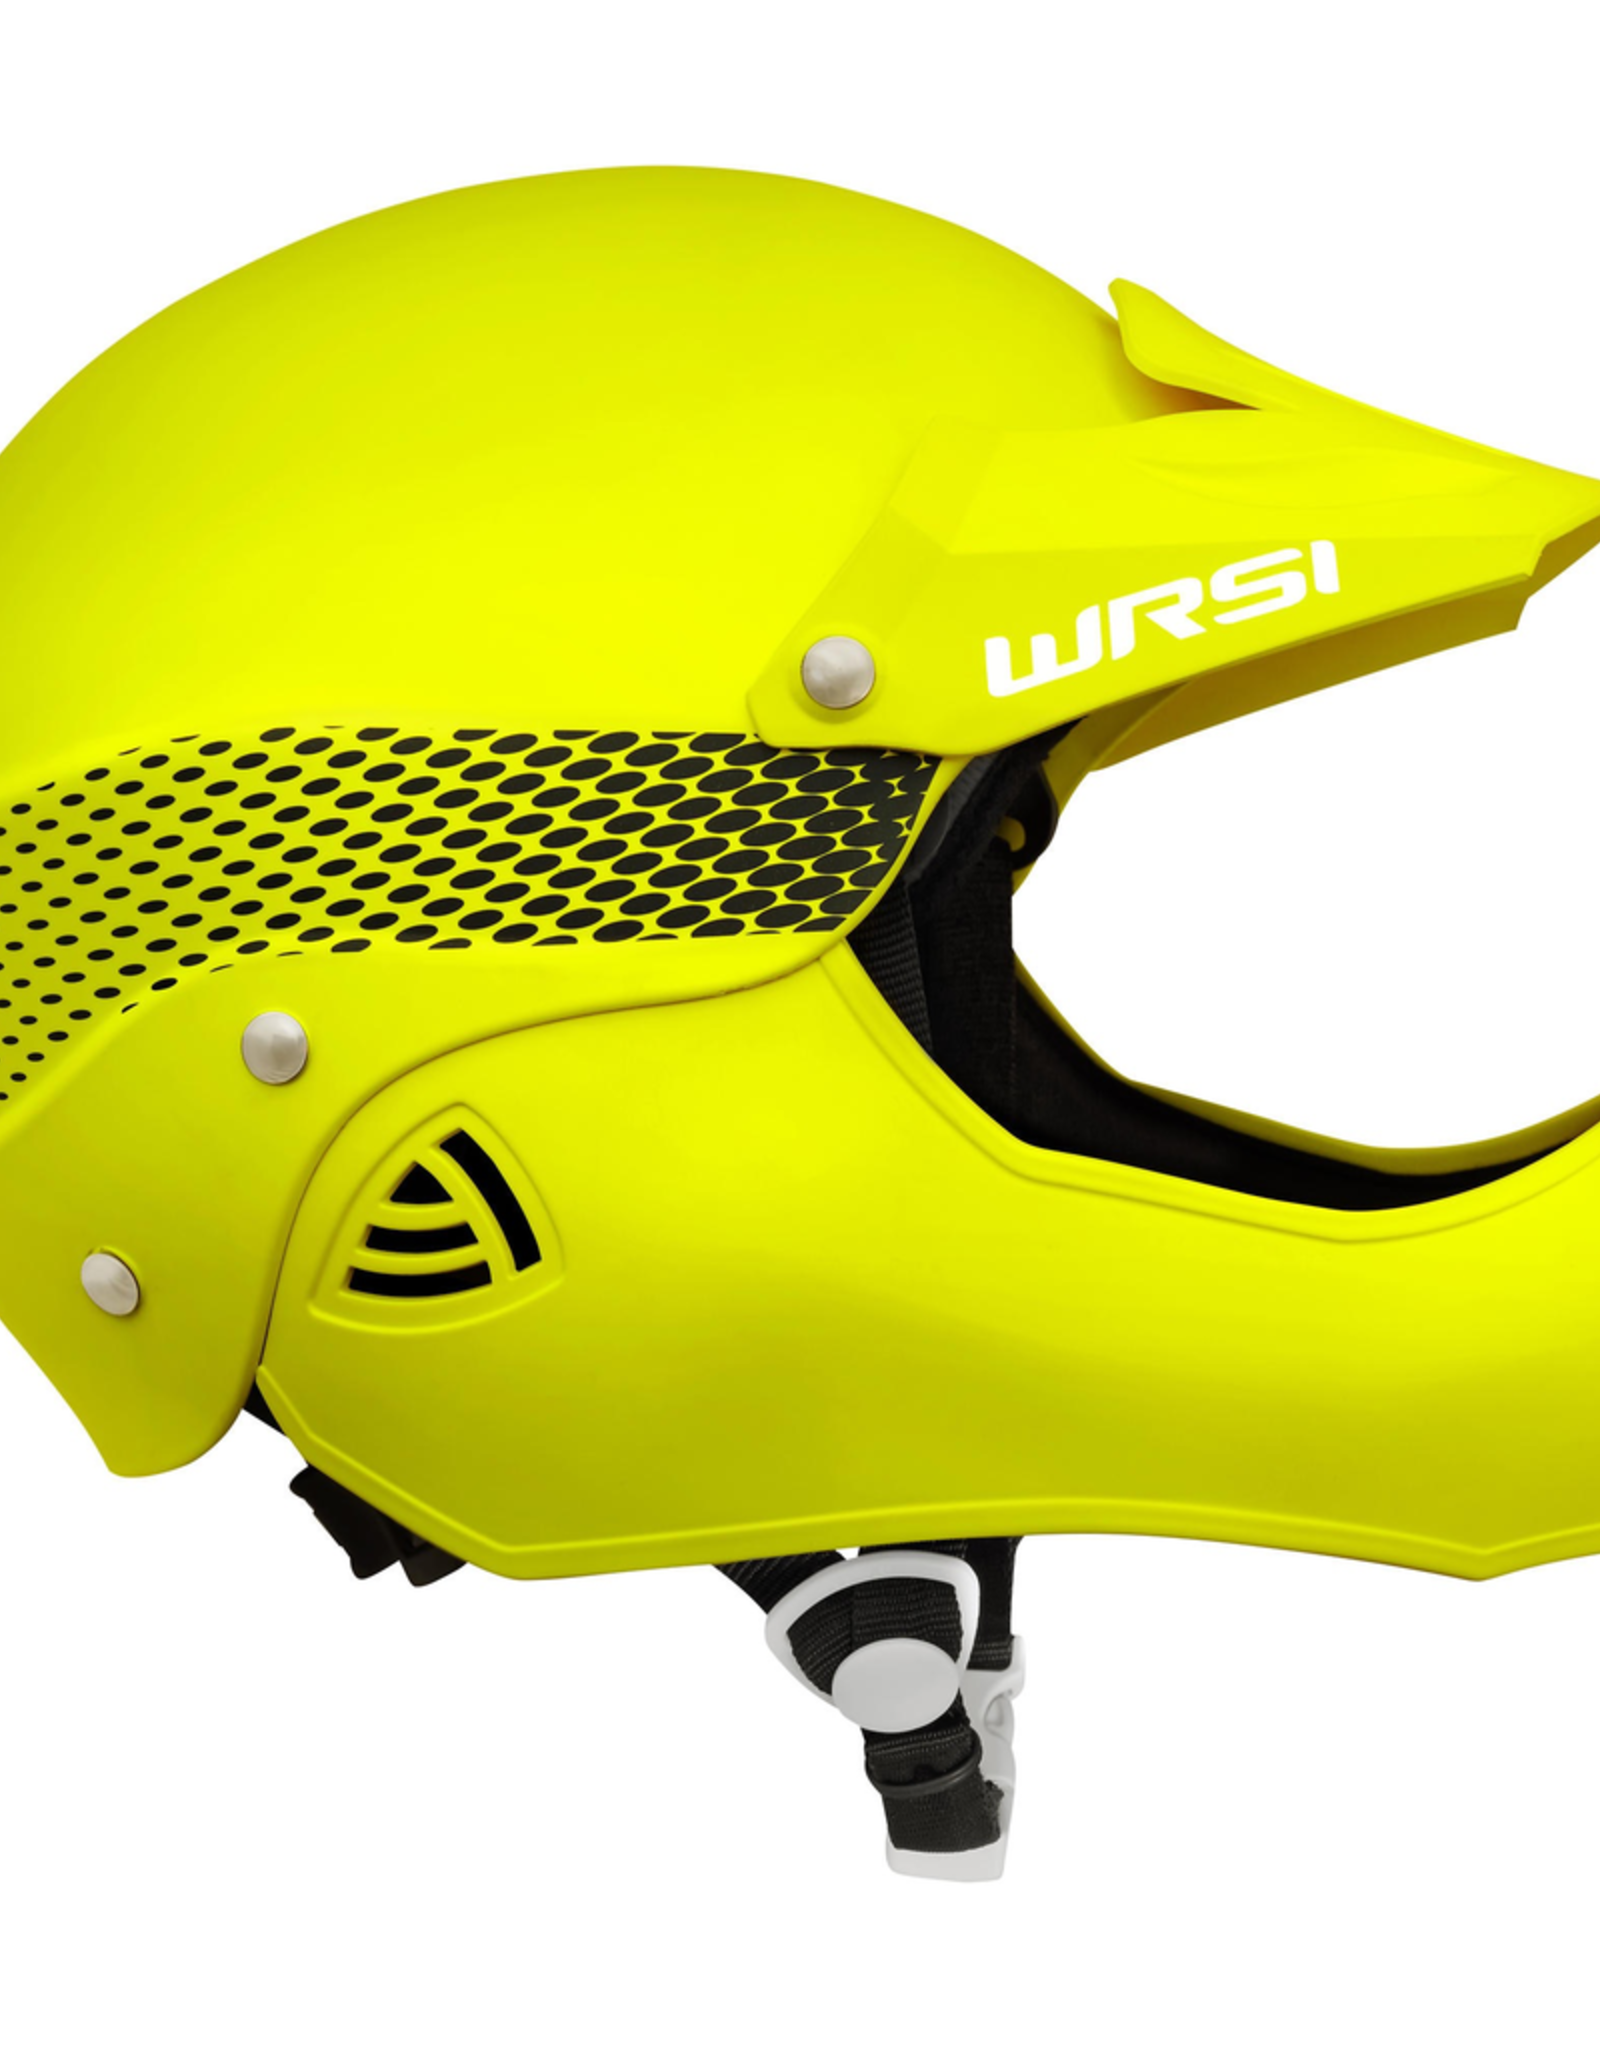 WRSI WRSI Moment Fullface Helmet Without Vents